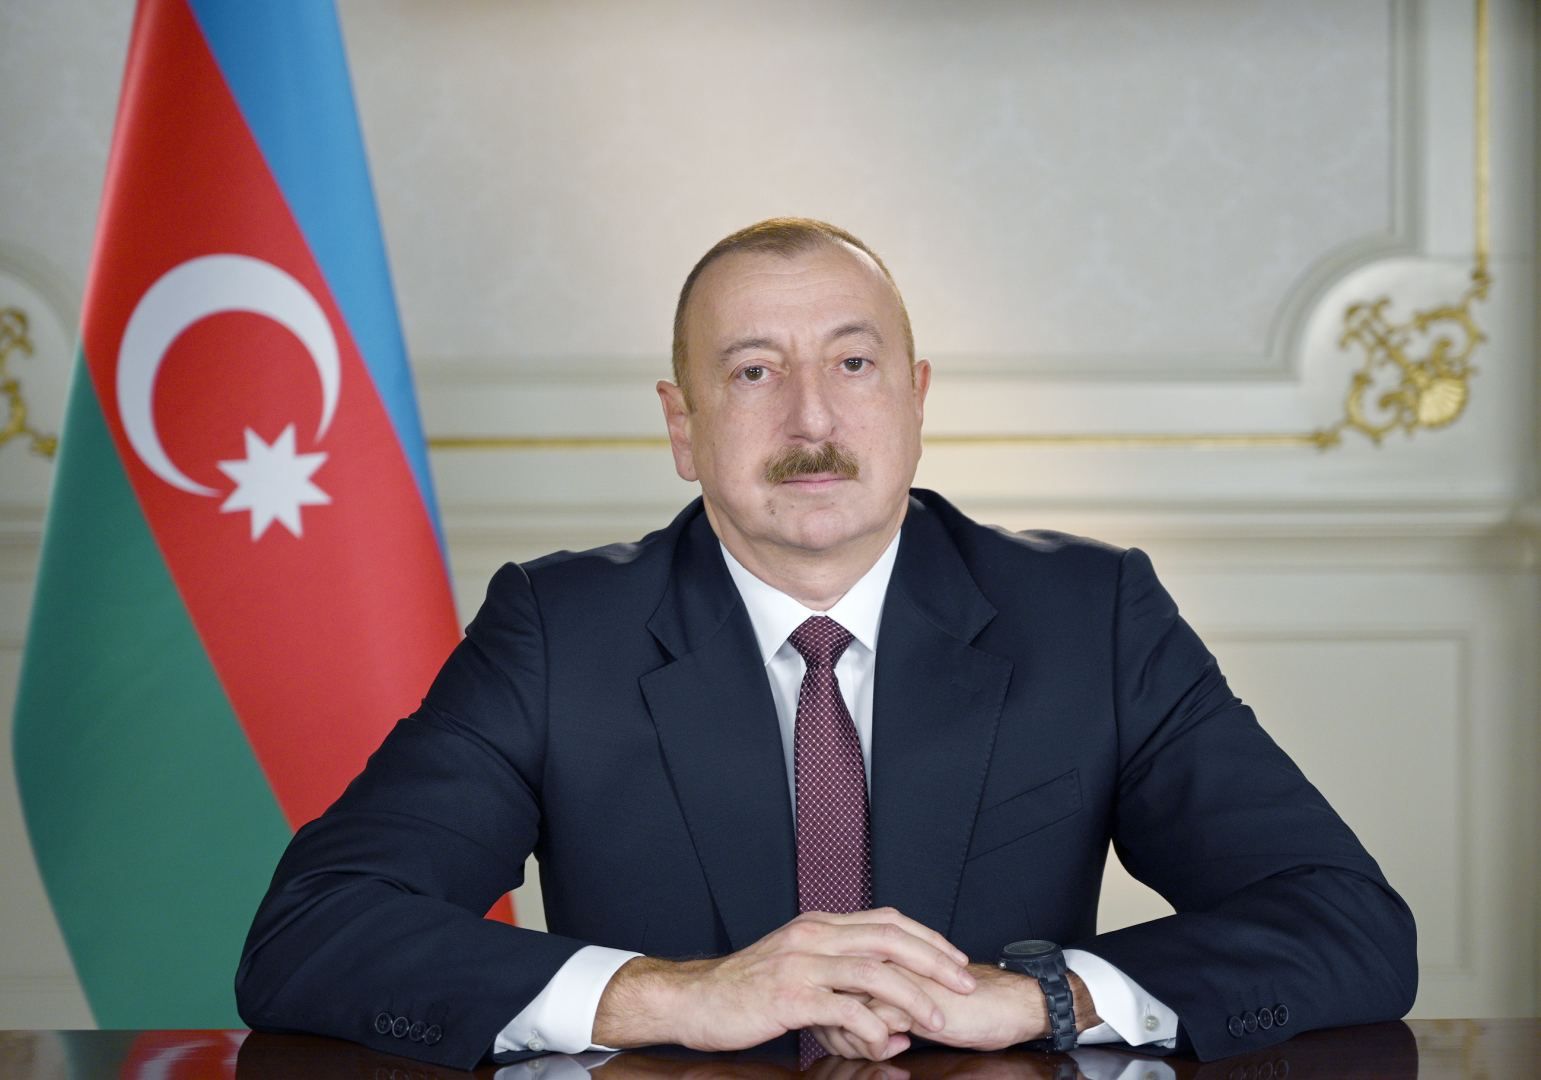 Group of Azerbaijani civil servants awarded following presidential order